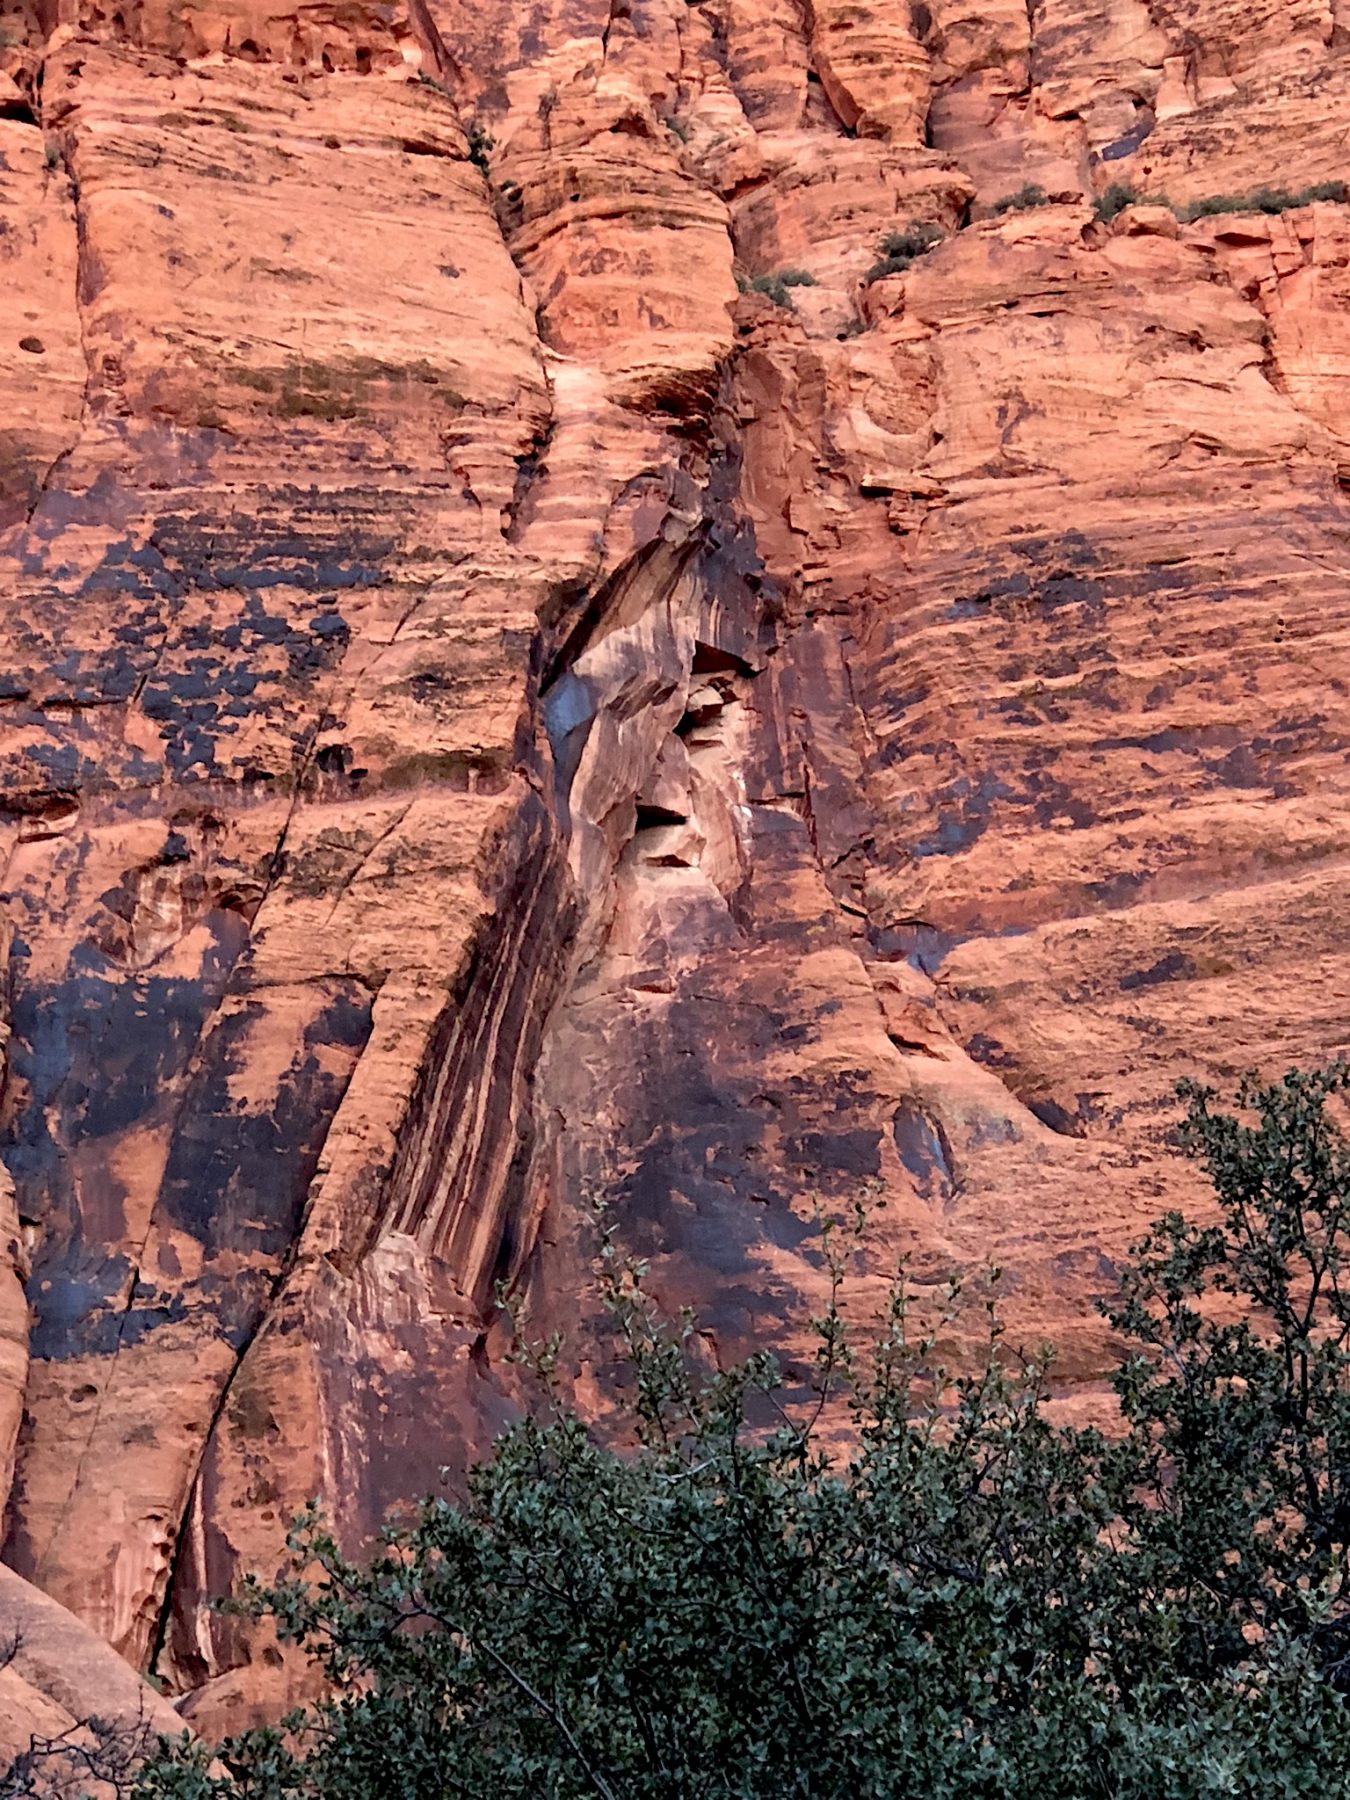 Hidden faces in the rocks